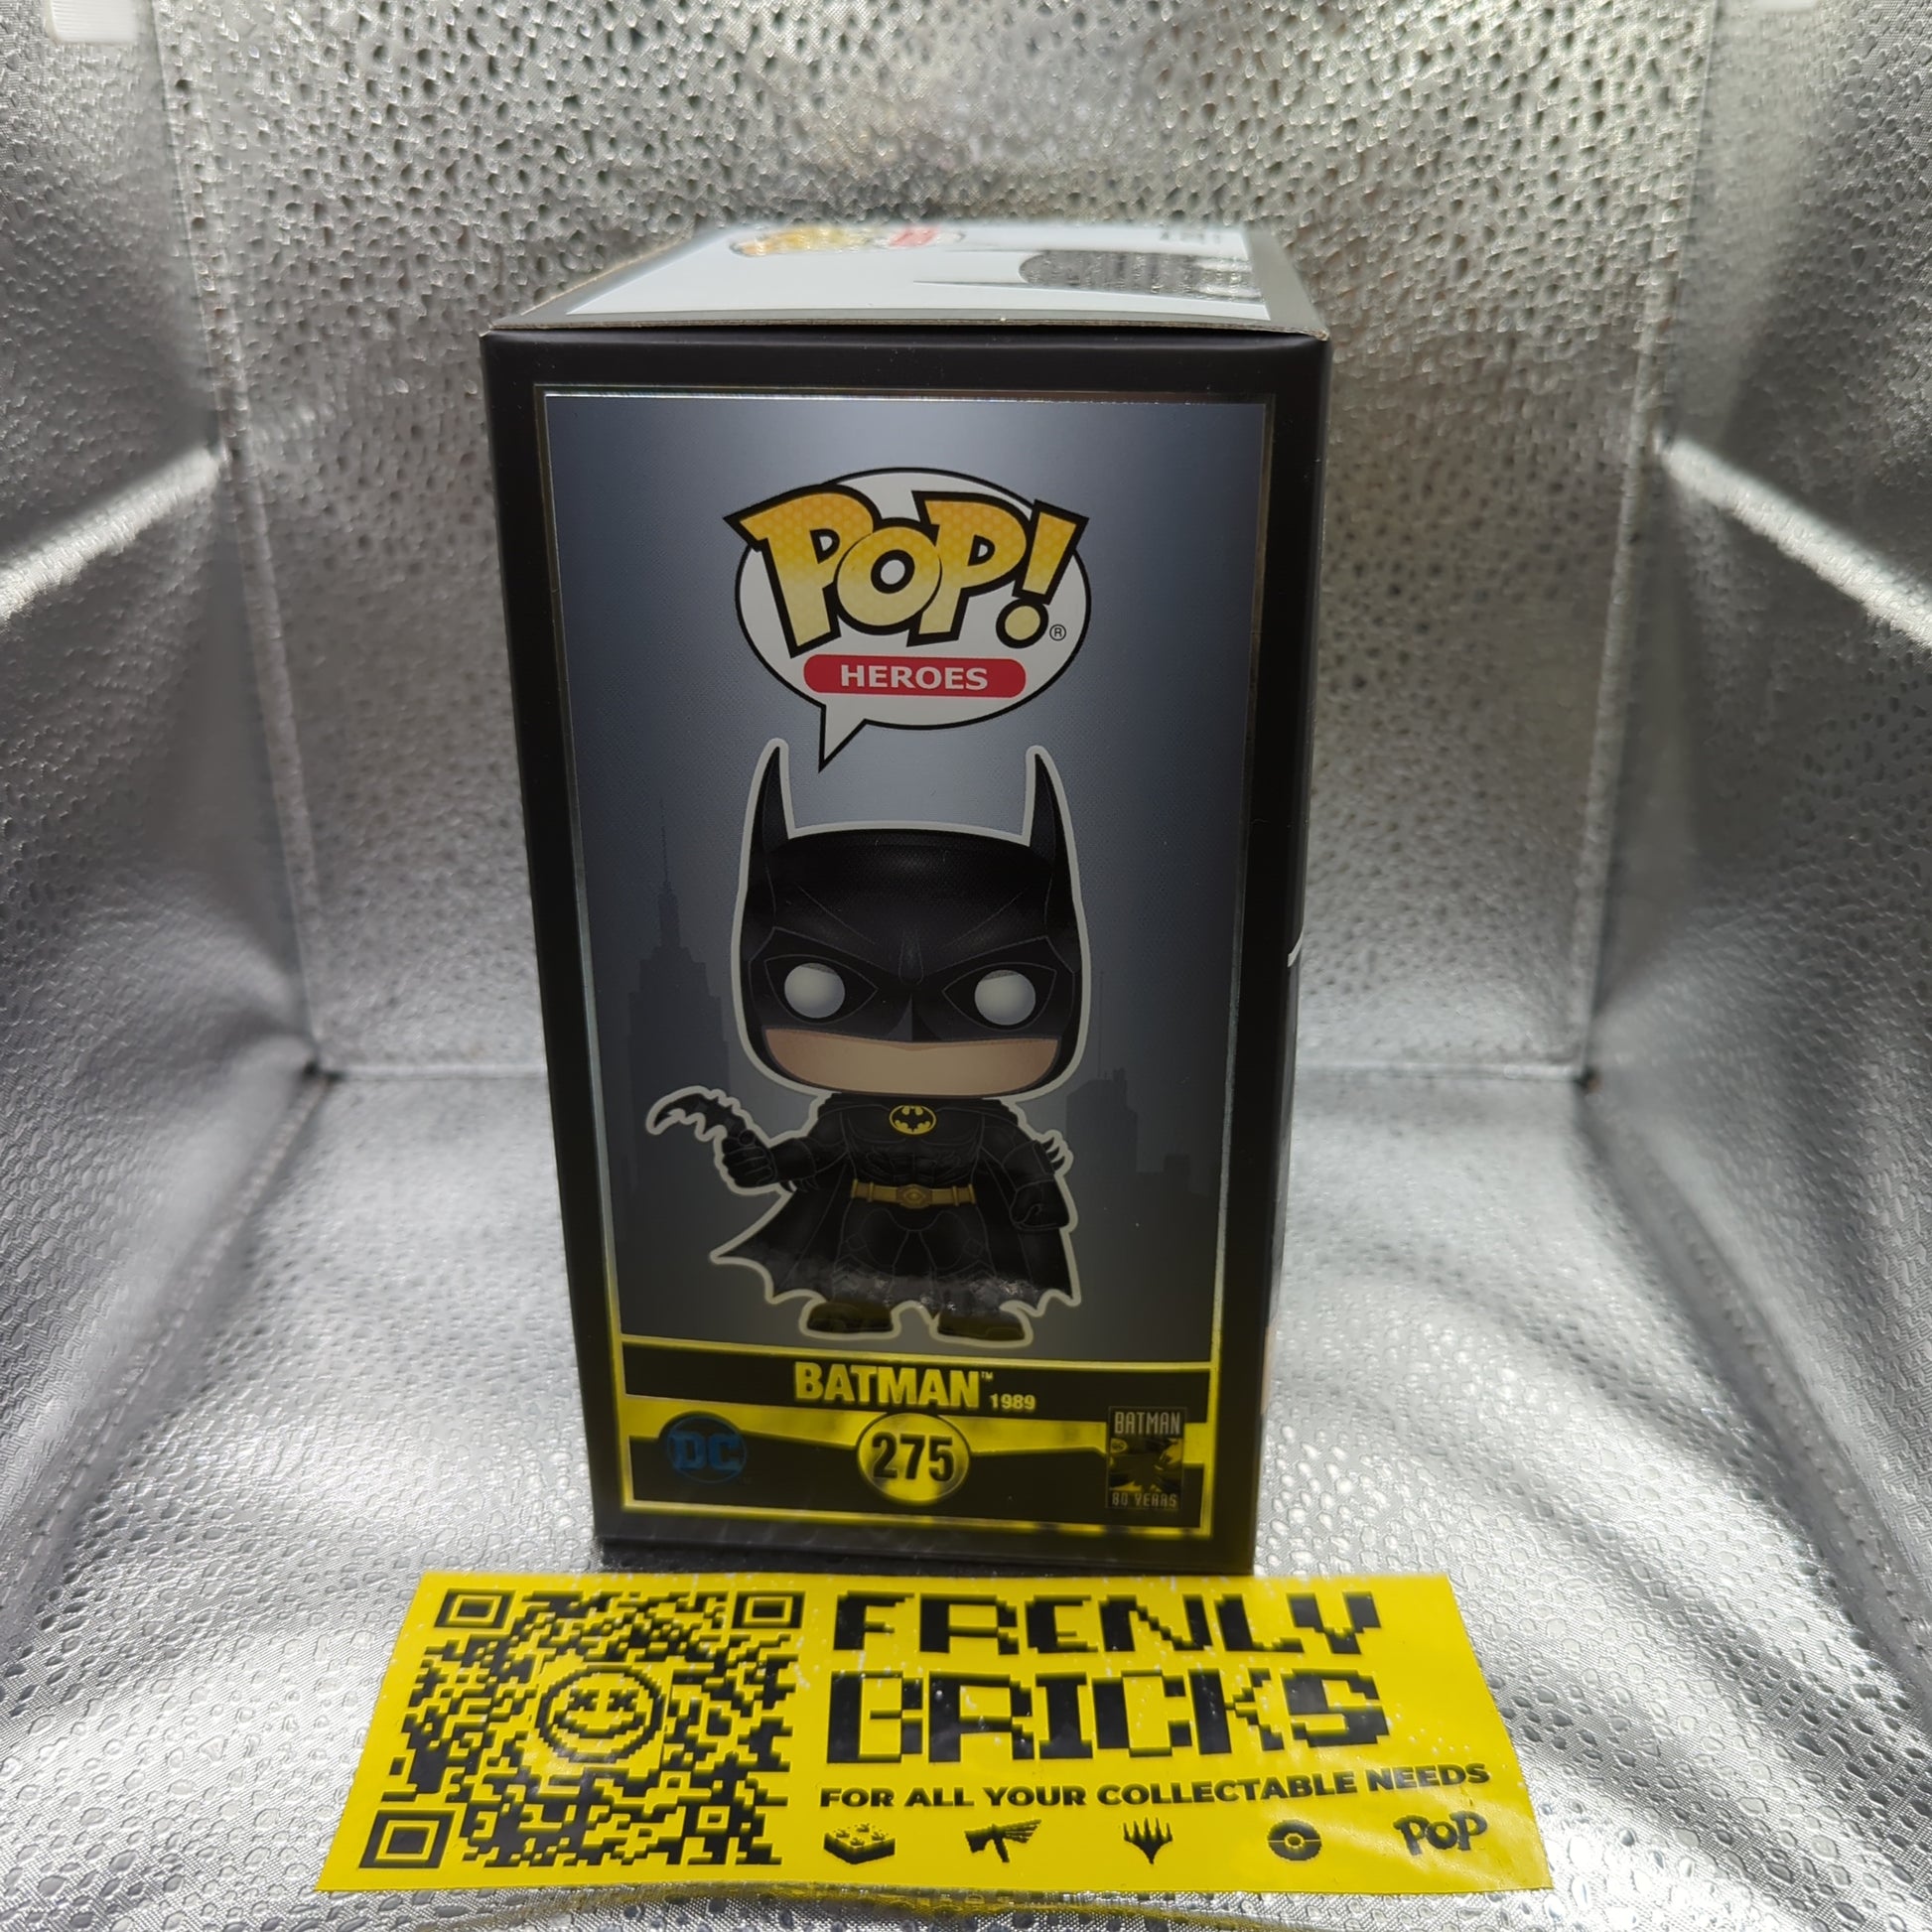 FUNKO POP! Heroes: Batman 80th - Batman Action Figure 275 FRENLY BRICKS - Open 7 Days